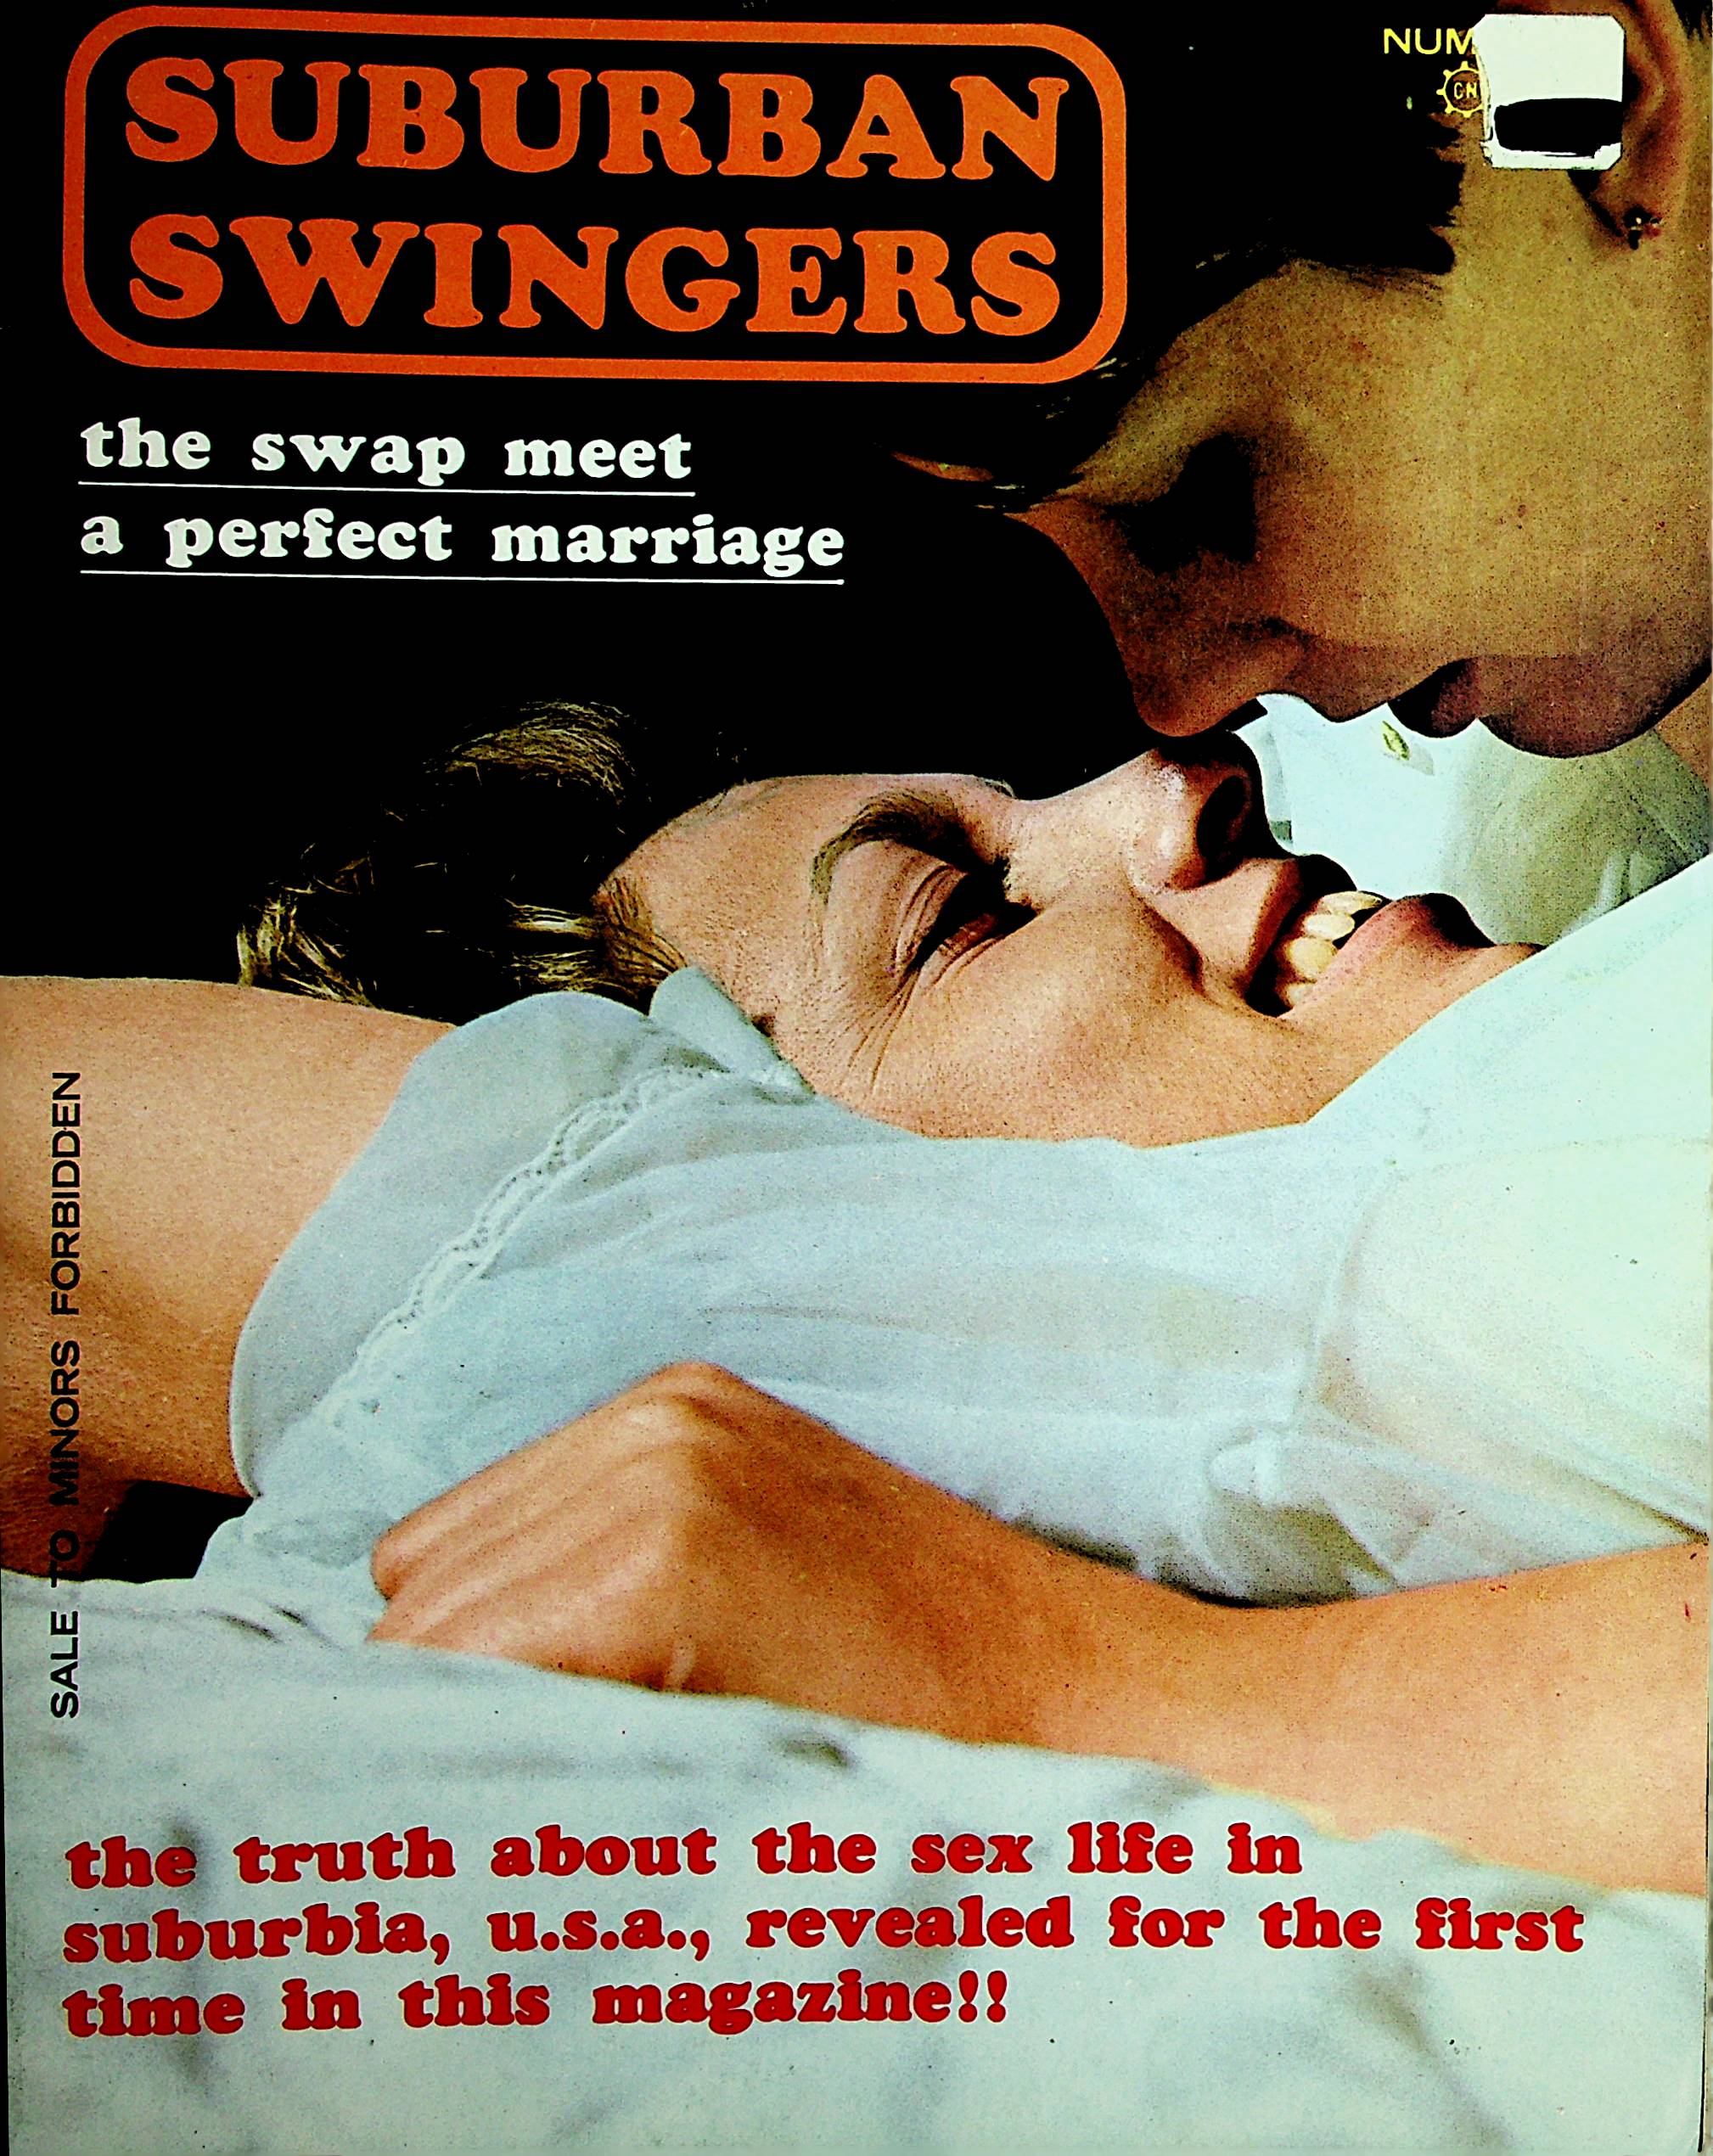 Suburban Swingers Magazine The Swap Meet A Perfect Marriage #1 1969 Pr